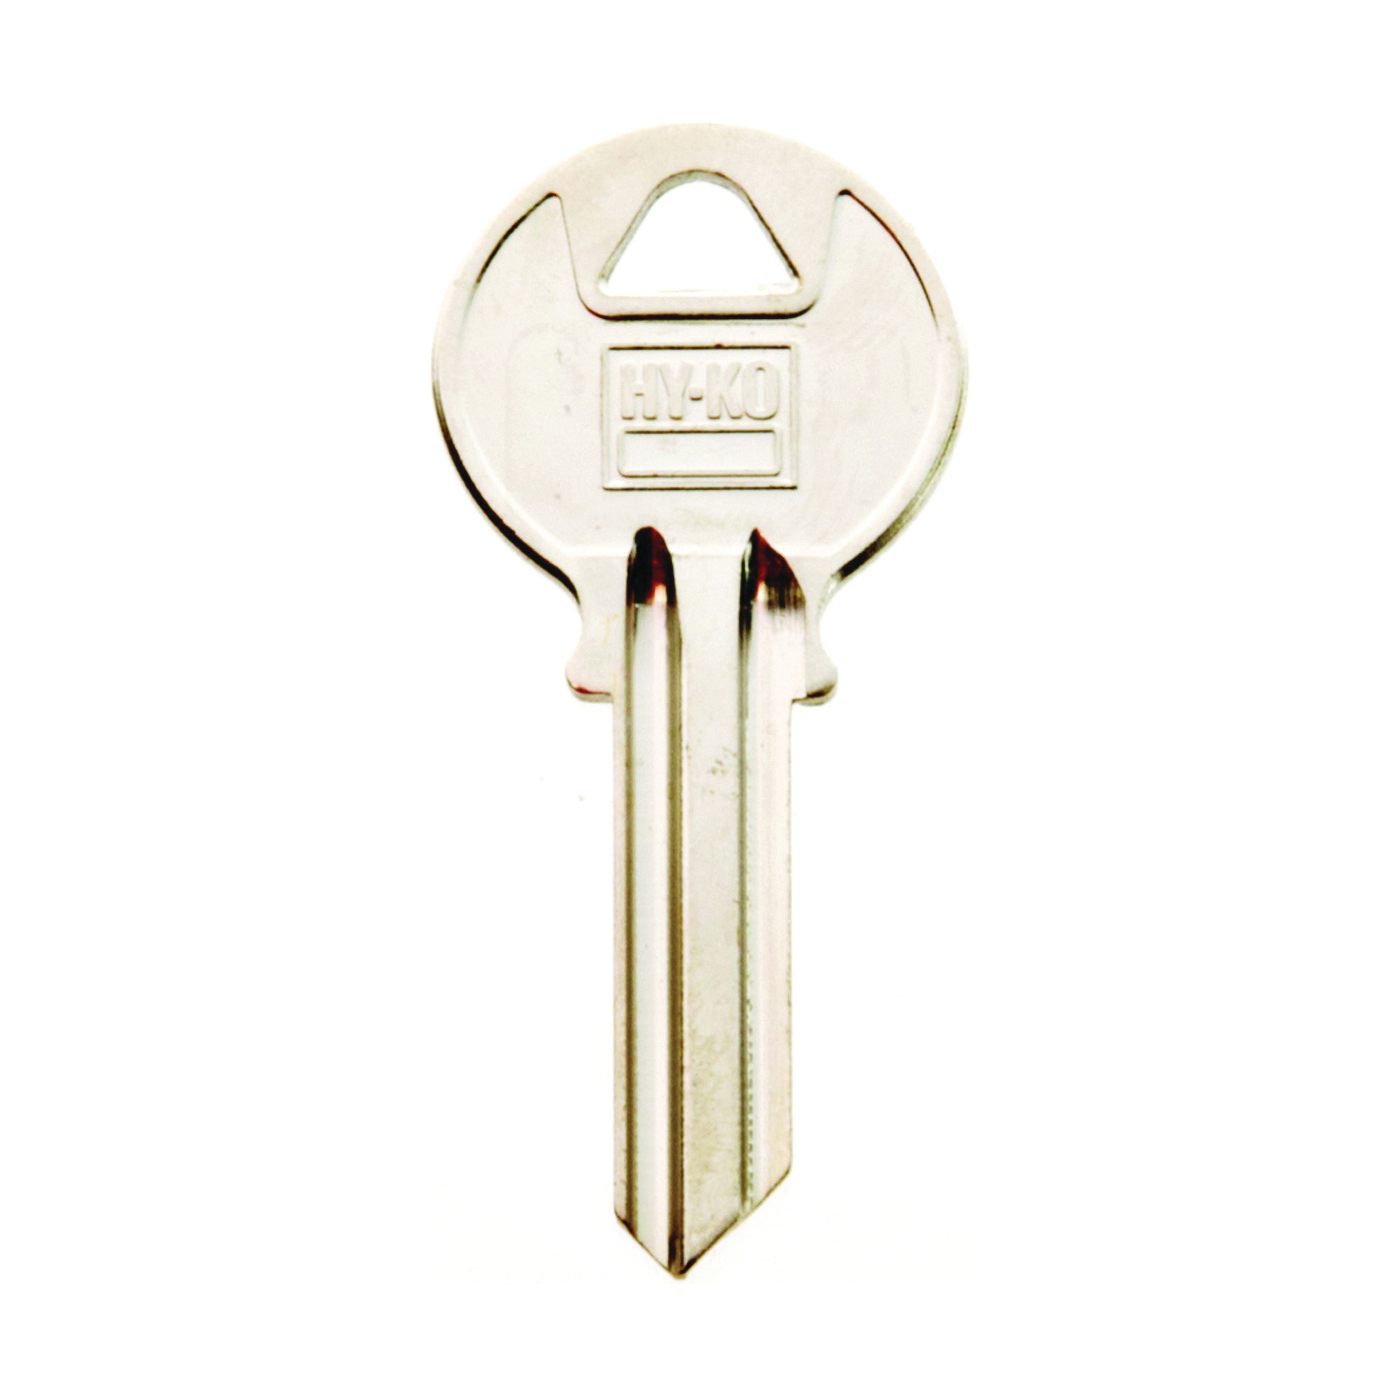 Hy-Ko 11050Y1 Key Blank, Brass, Nickel, For: Yale Cabinet, House Locks and Padlocks